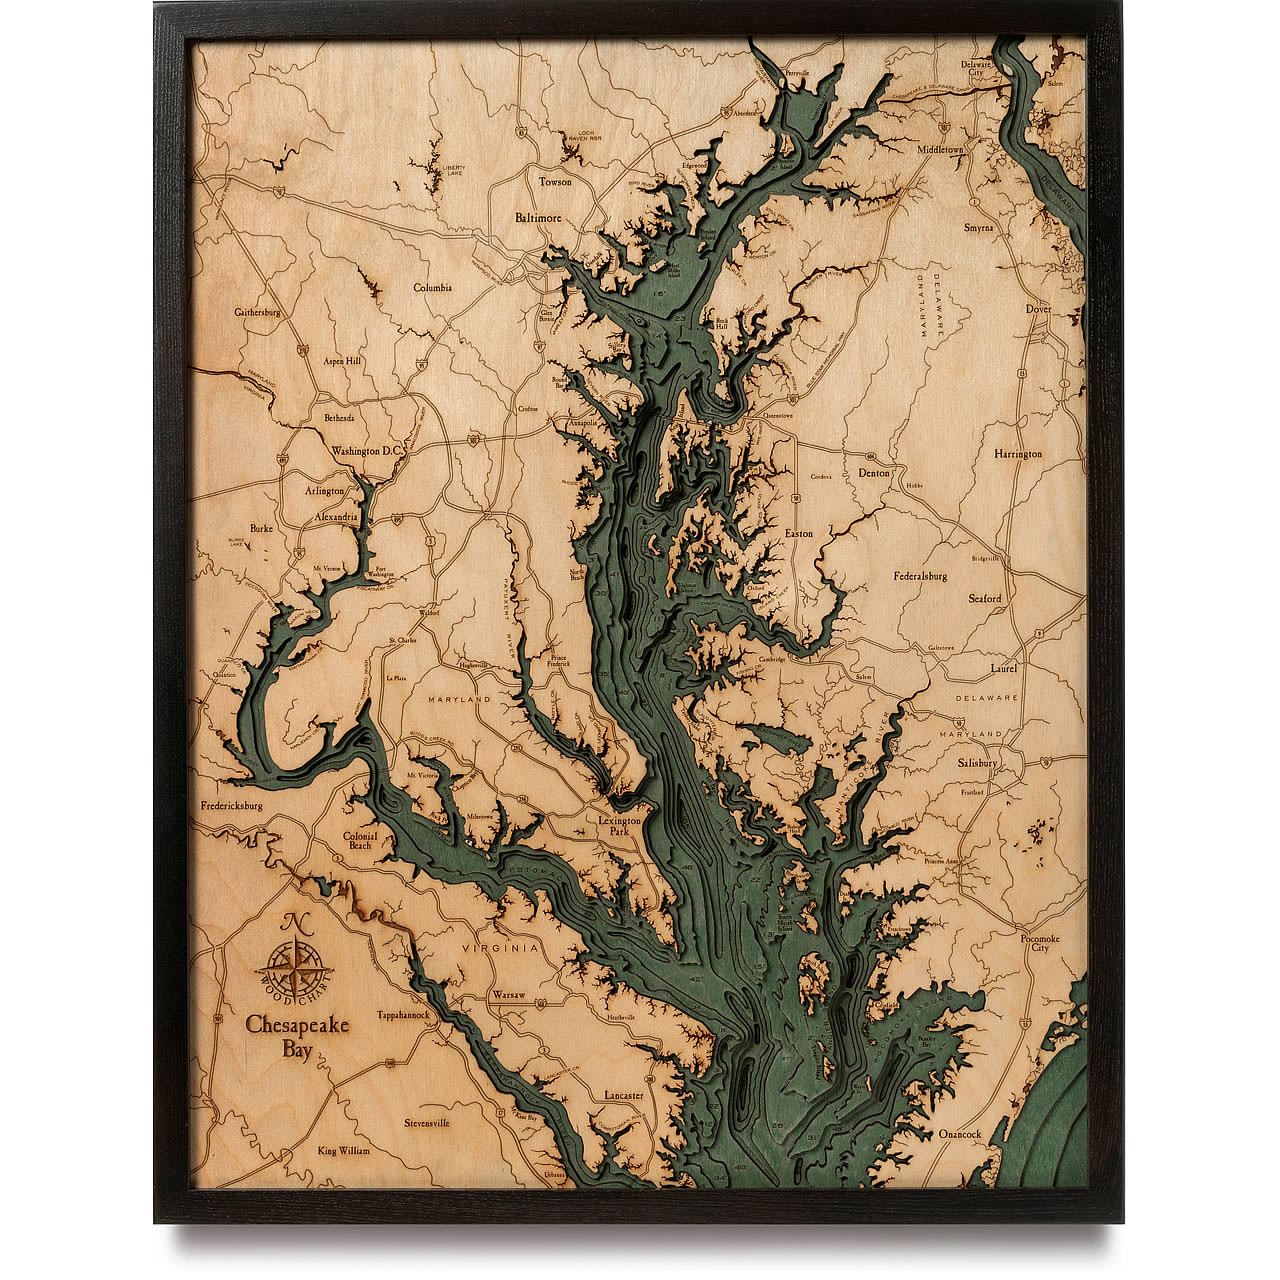 Nautical North Wooden Charts